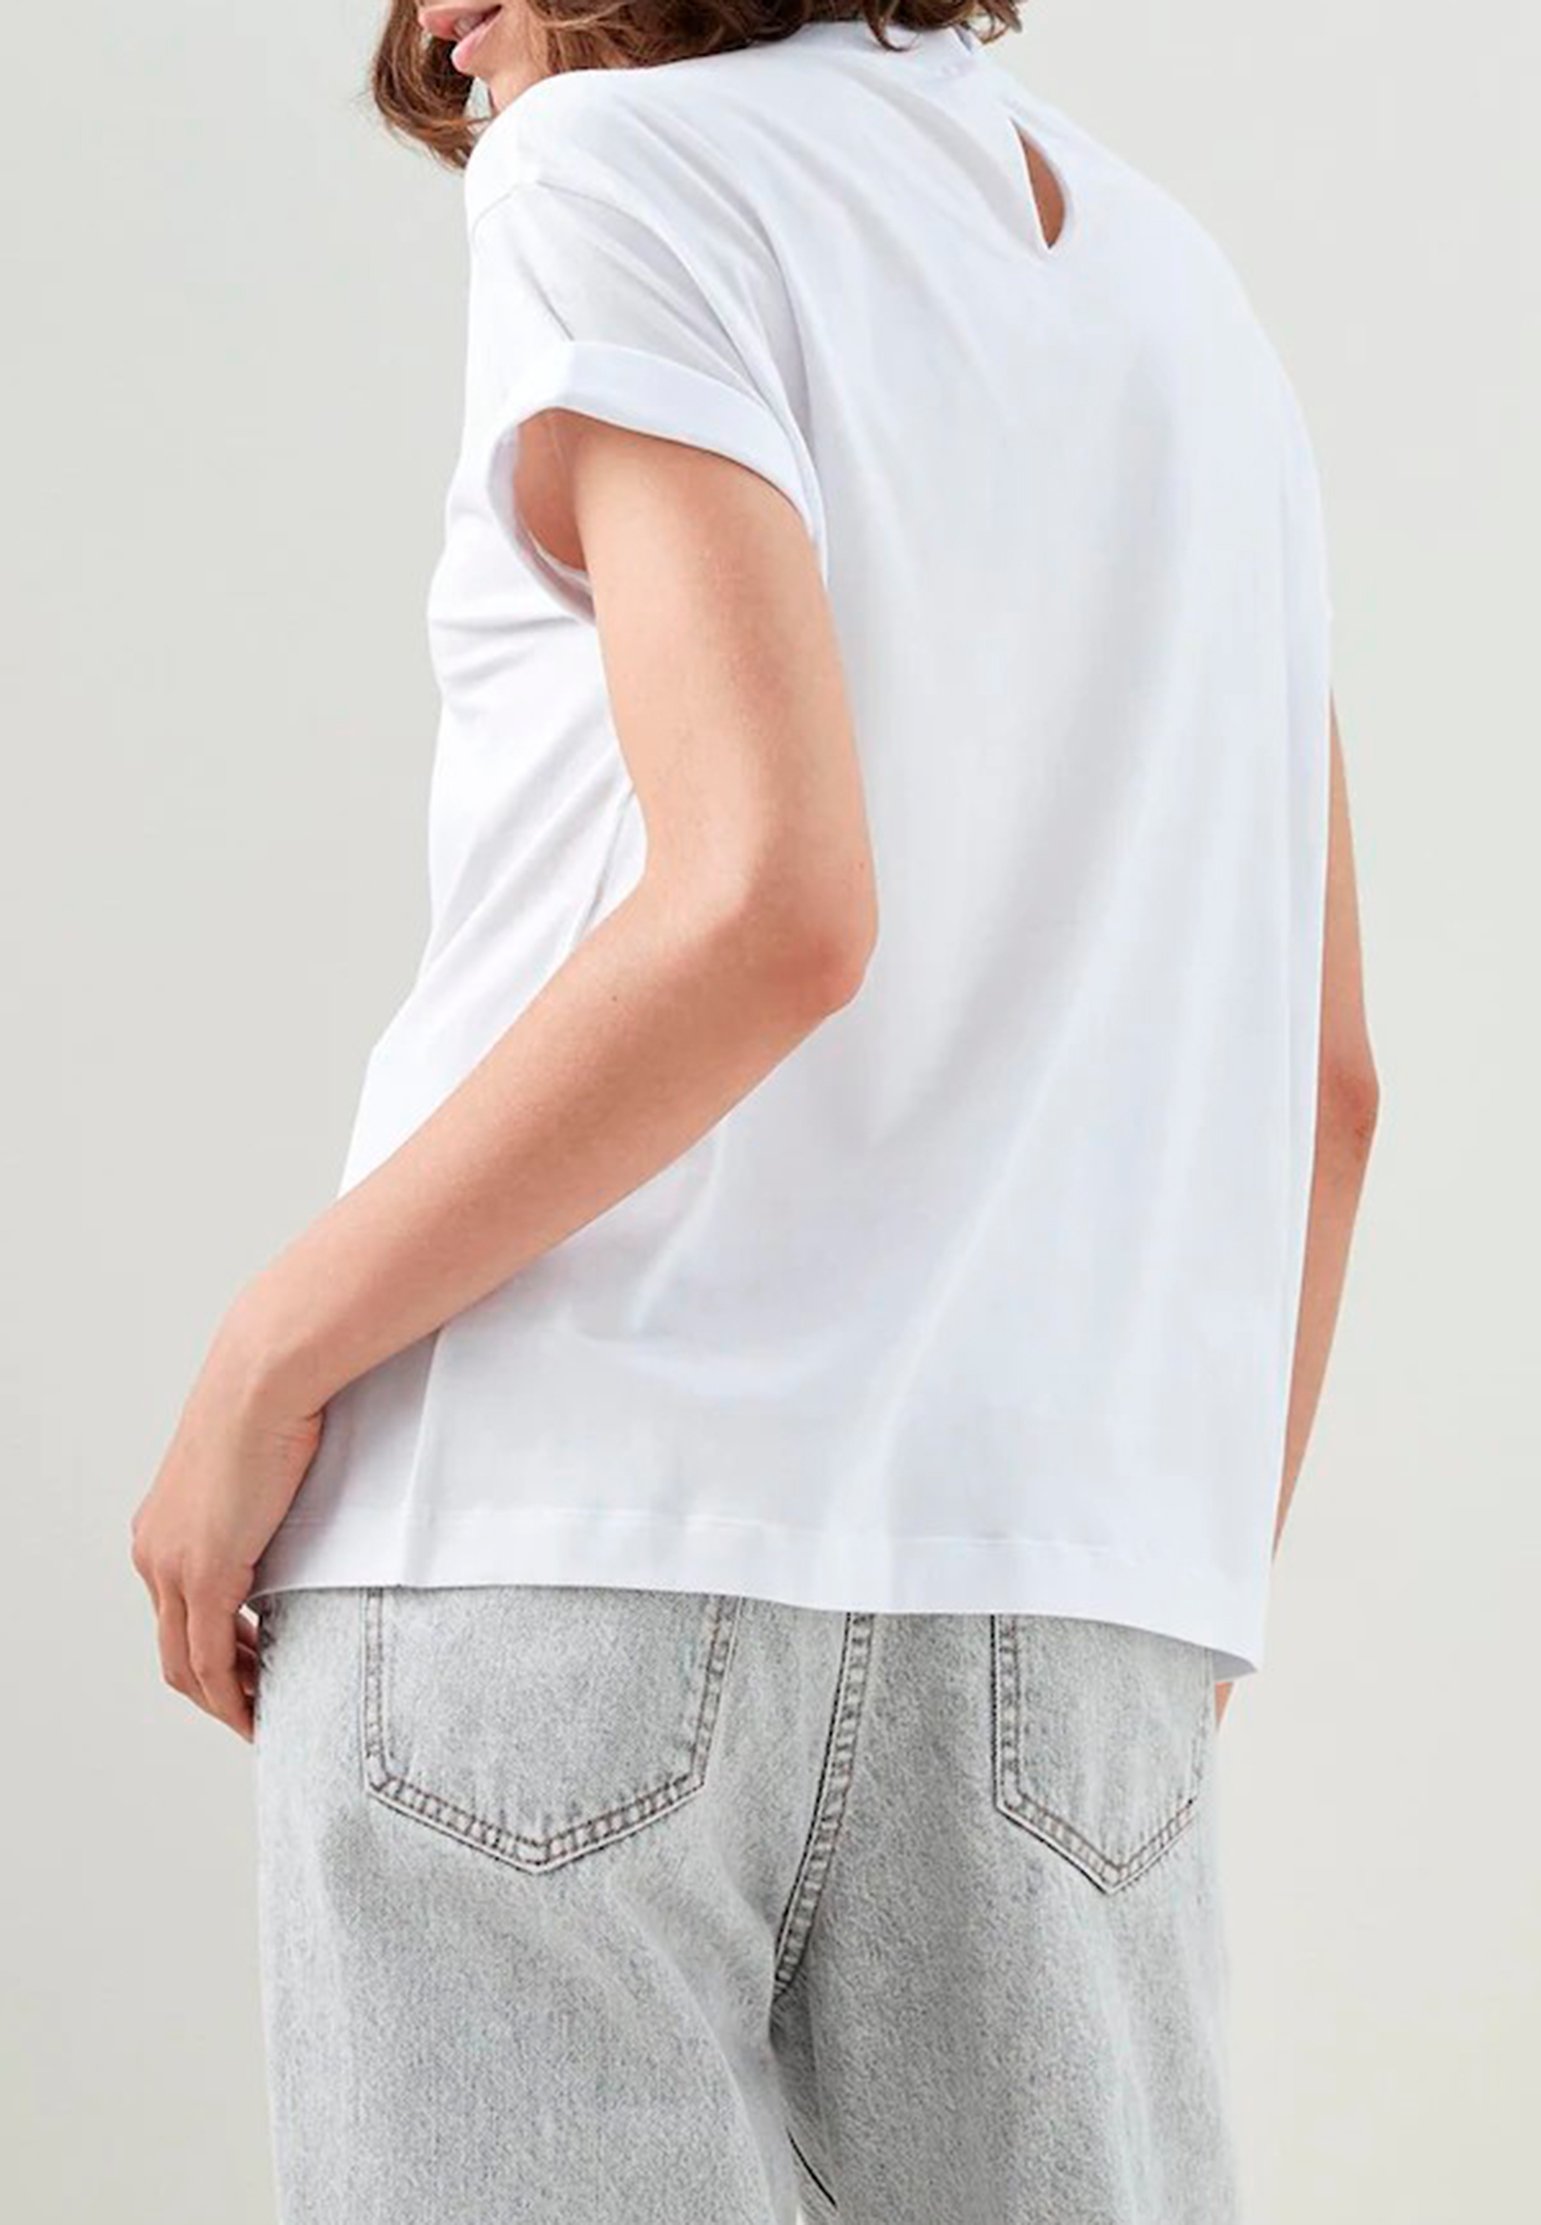 T-Shirt BRUNELLO CUCINELLI Color: white (Code: 269) in online store Allure